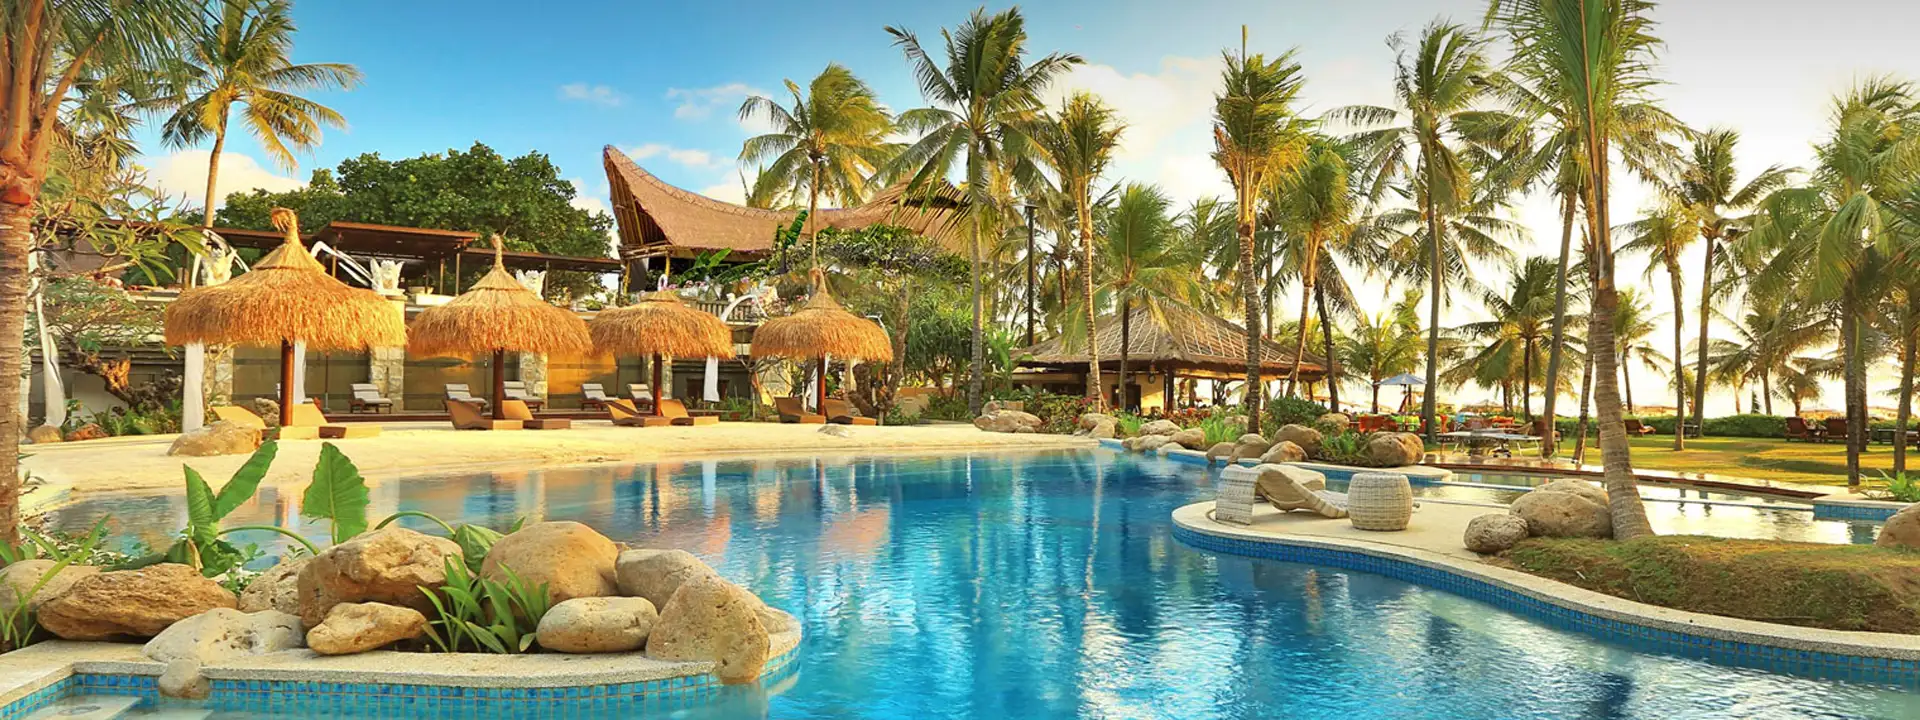 BALI-MANDIRA-BEACH-HOLIDAY-PACKAGE-slider-palms-at-the-pool